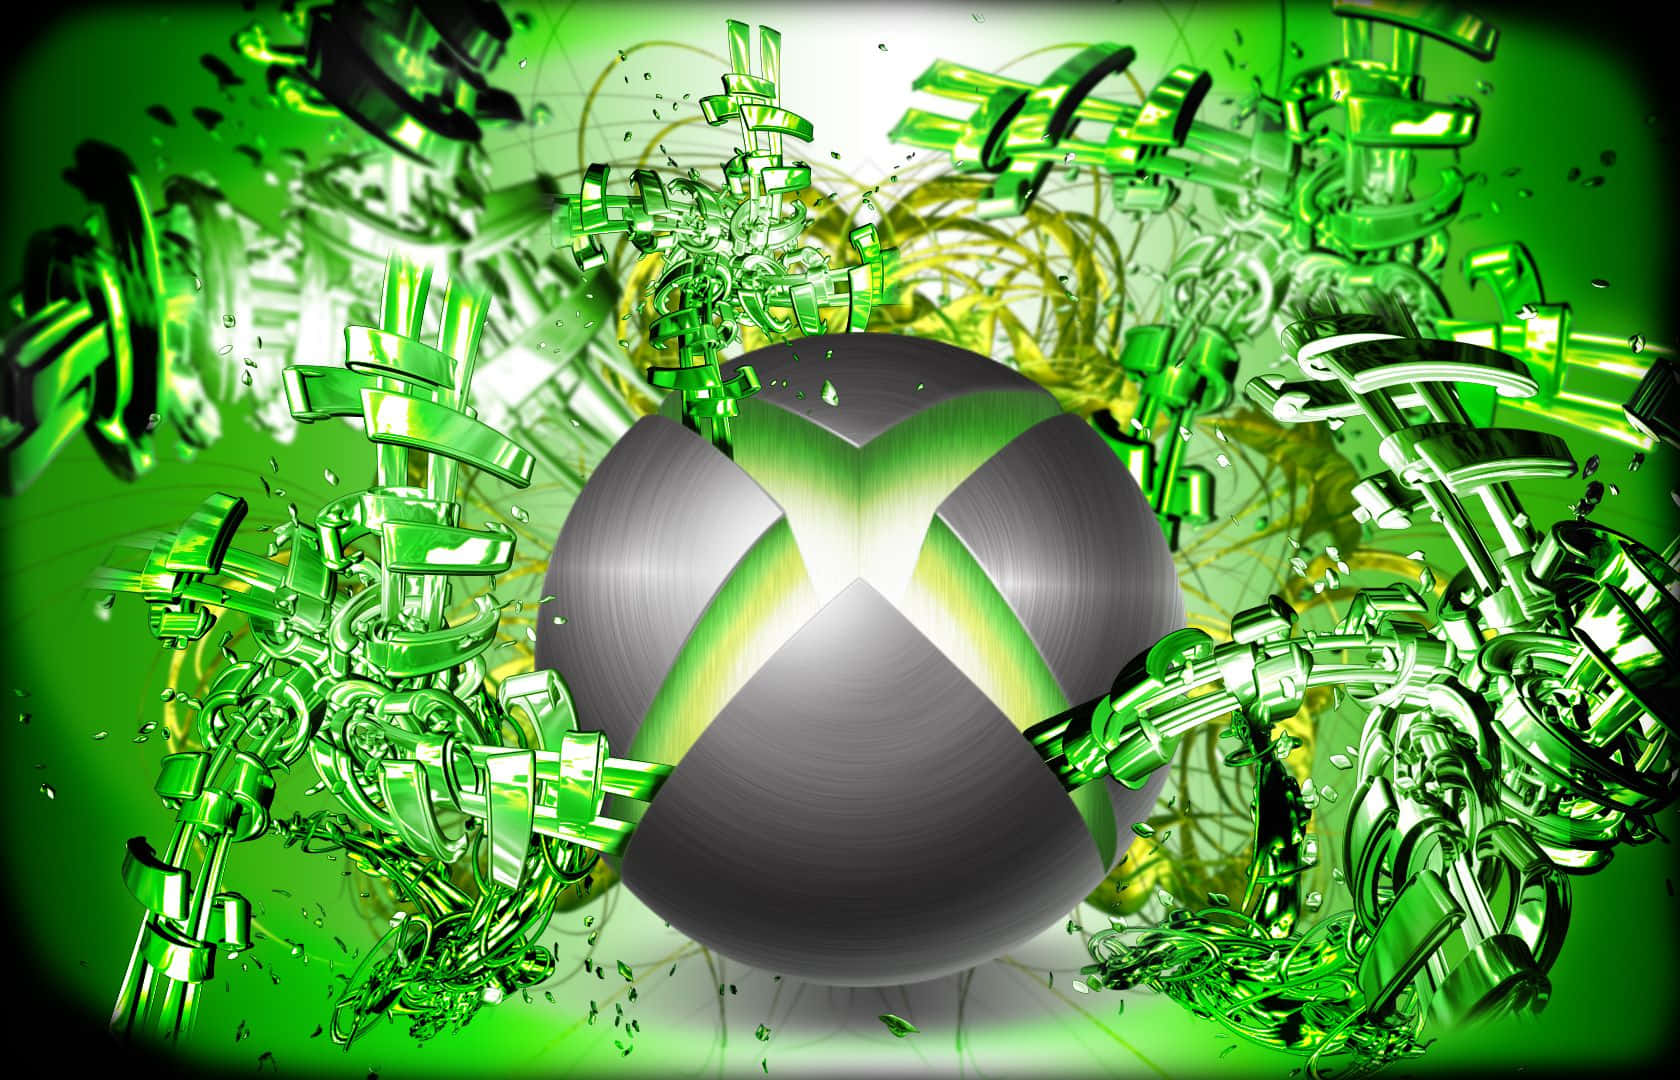 528778 1920x1080 Xbox 360 Logo Symbol Xbox wallpaper JPG  Rare Gallery  HD Wallpapers